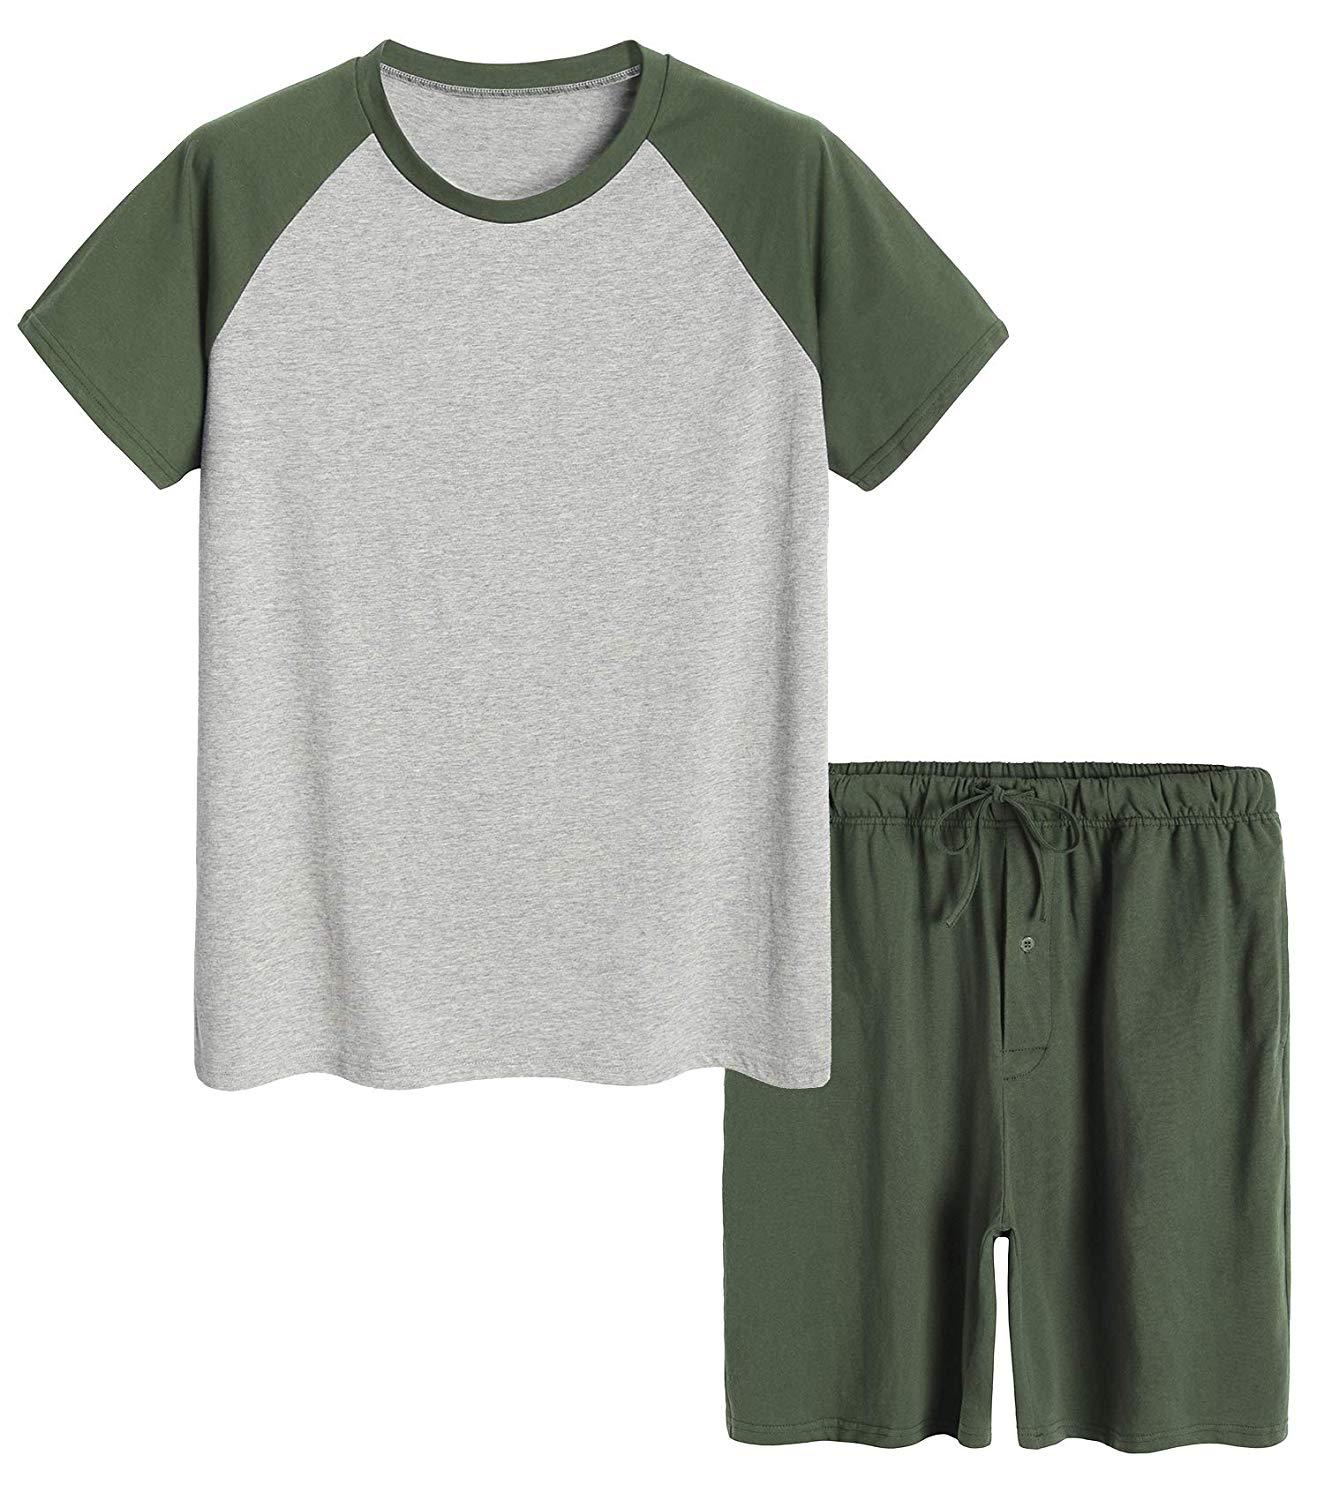 Men's Cotton Woven Short Sleepwear Pajama Set